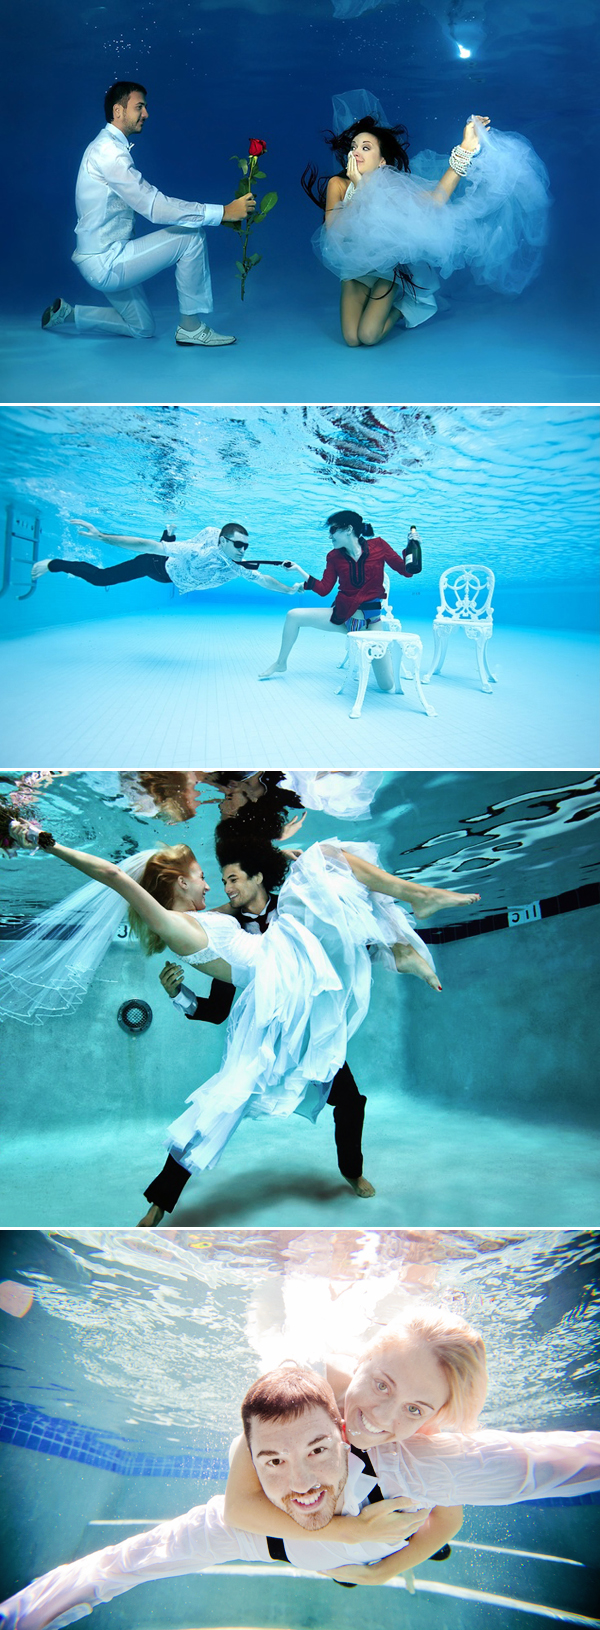 Funny Underwater Engagement Photos